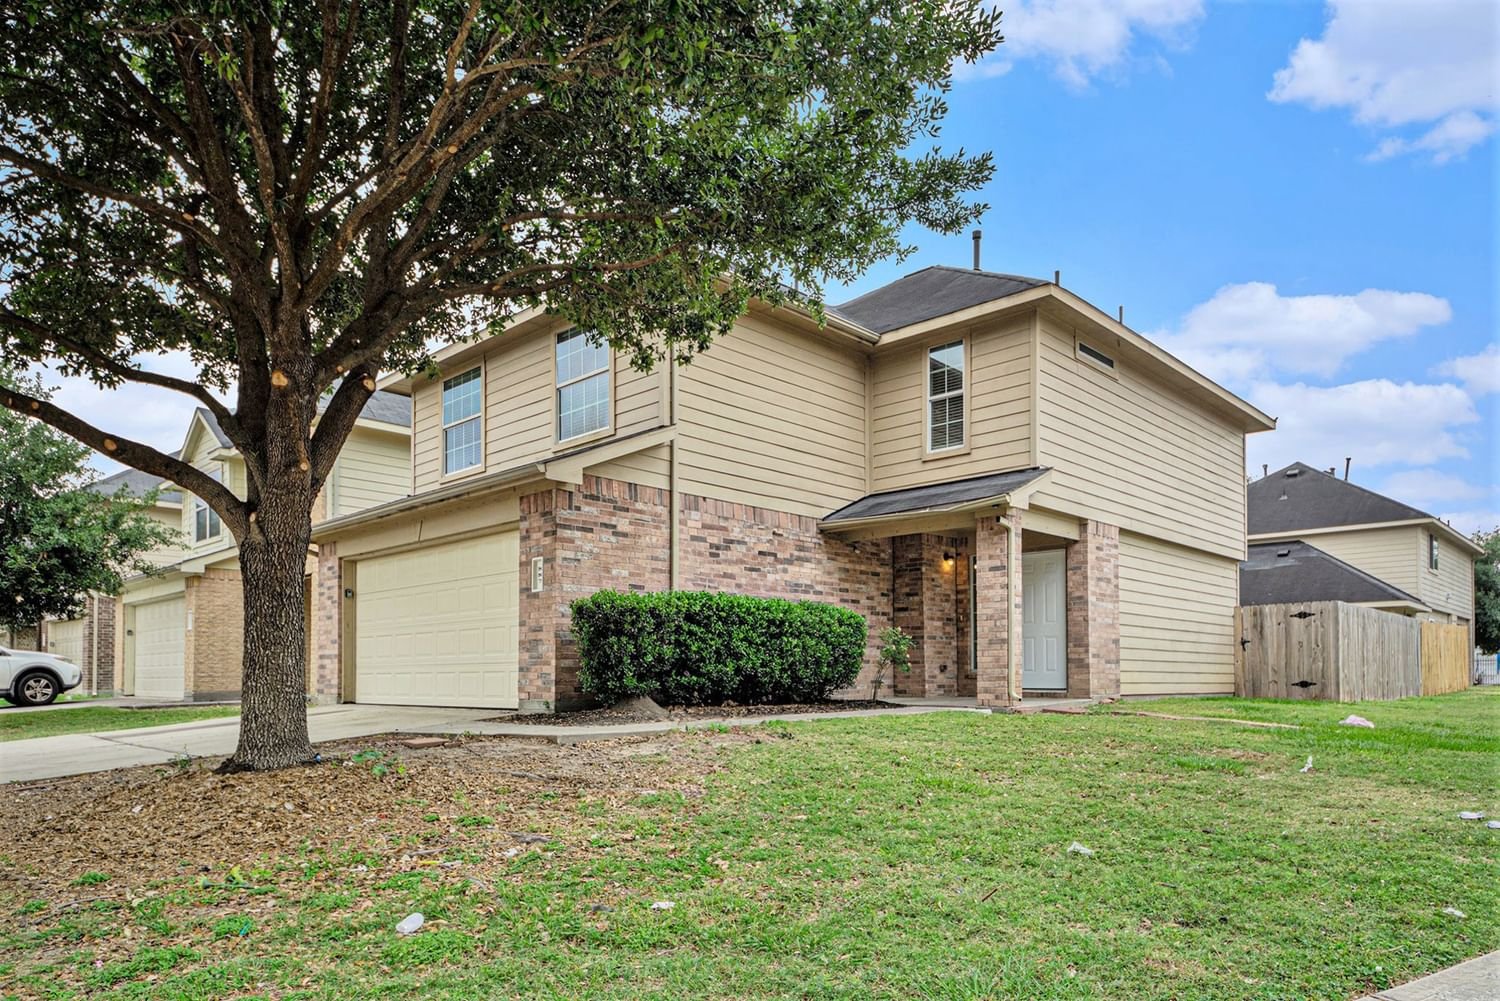 Real estate property located at 887 Darbydale Crossing, Harris, Darbydale Xing Sec 1, Houston, TX, US